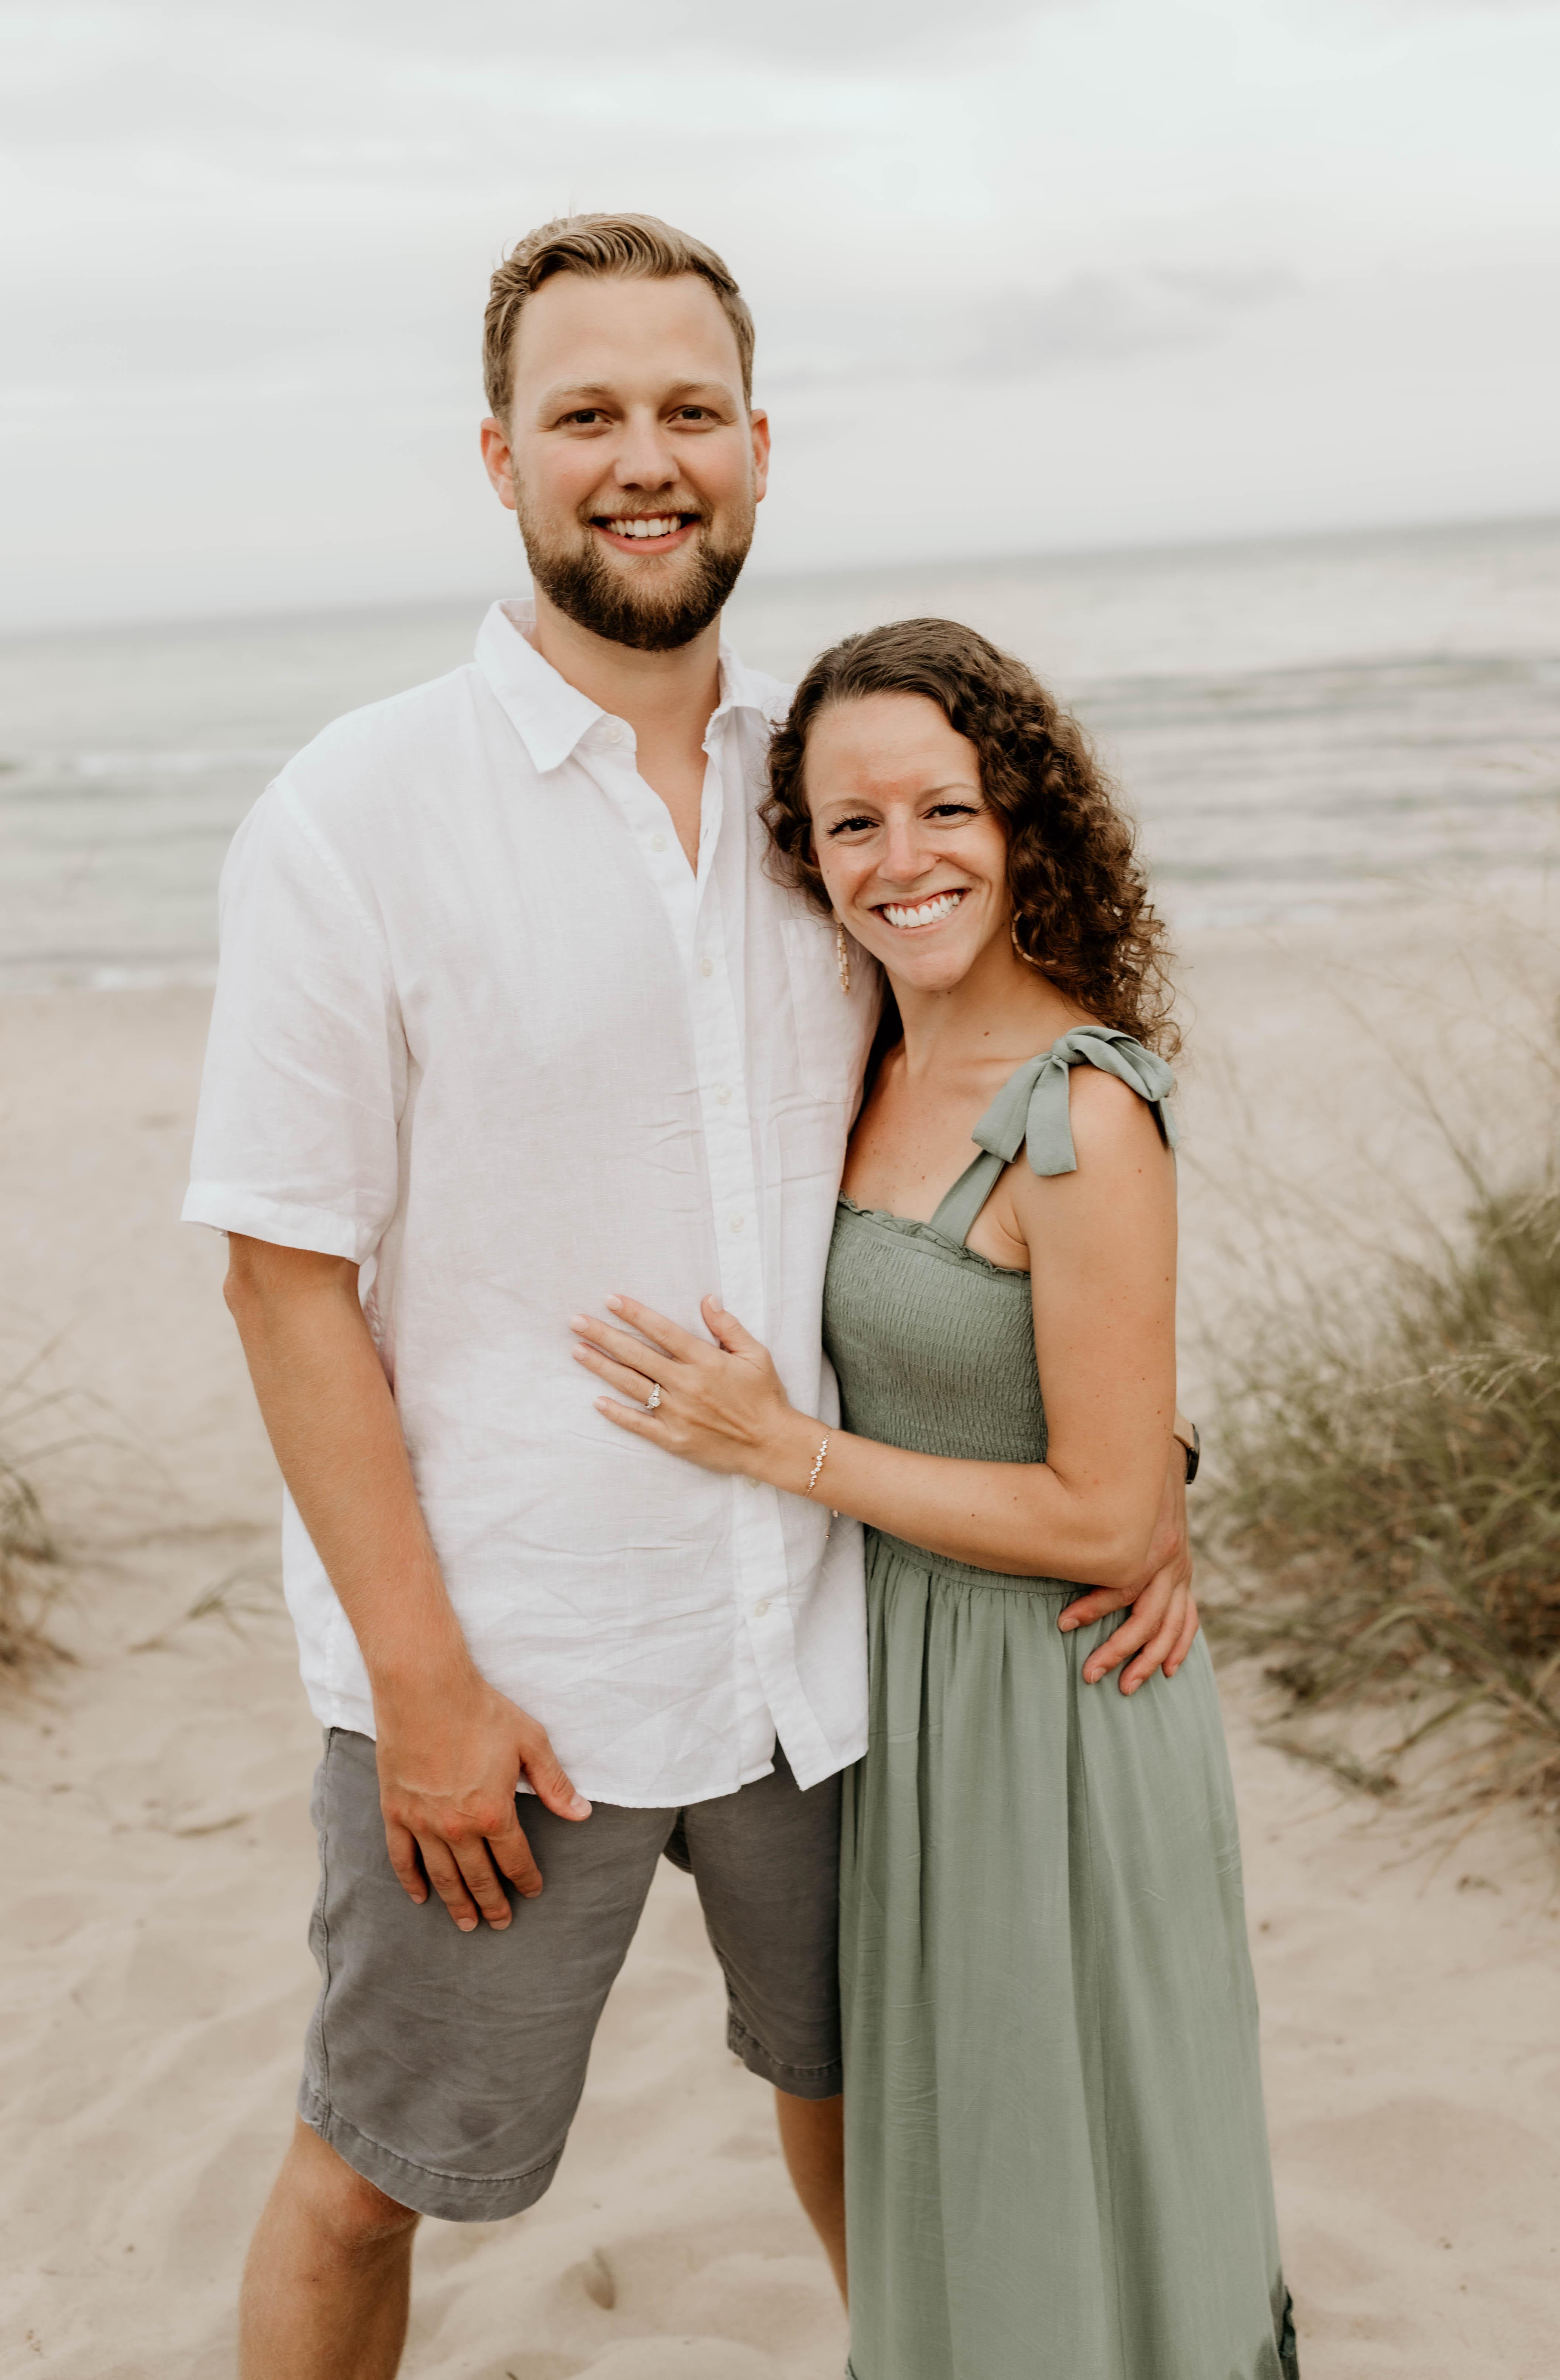 The Wedding Website of Kaitlyn MacPherson and Sawyer Johnson